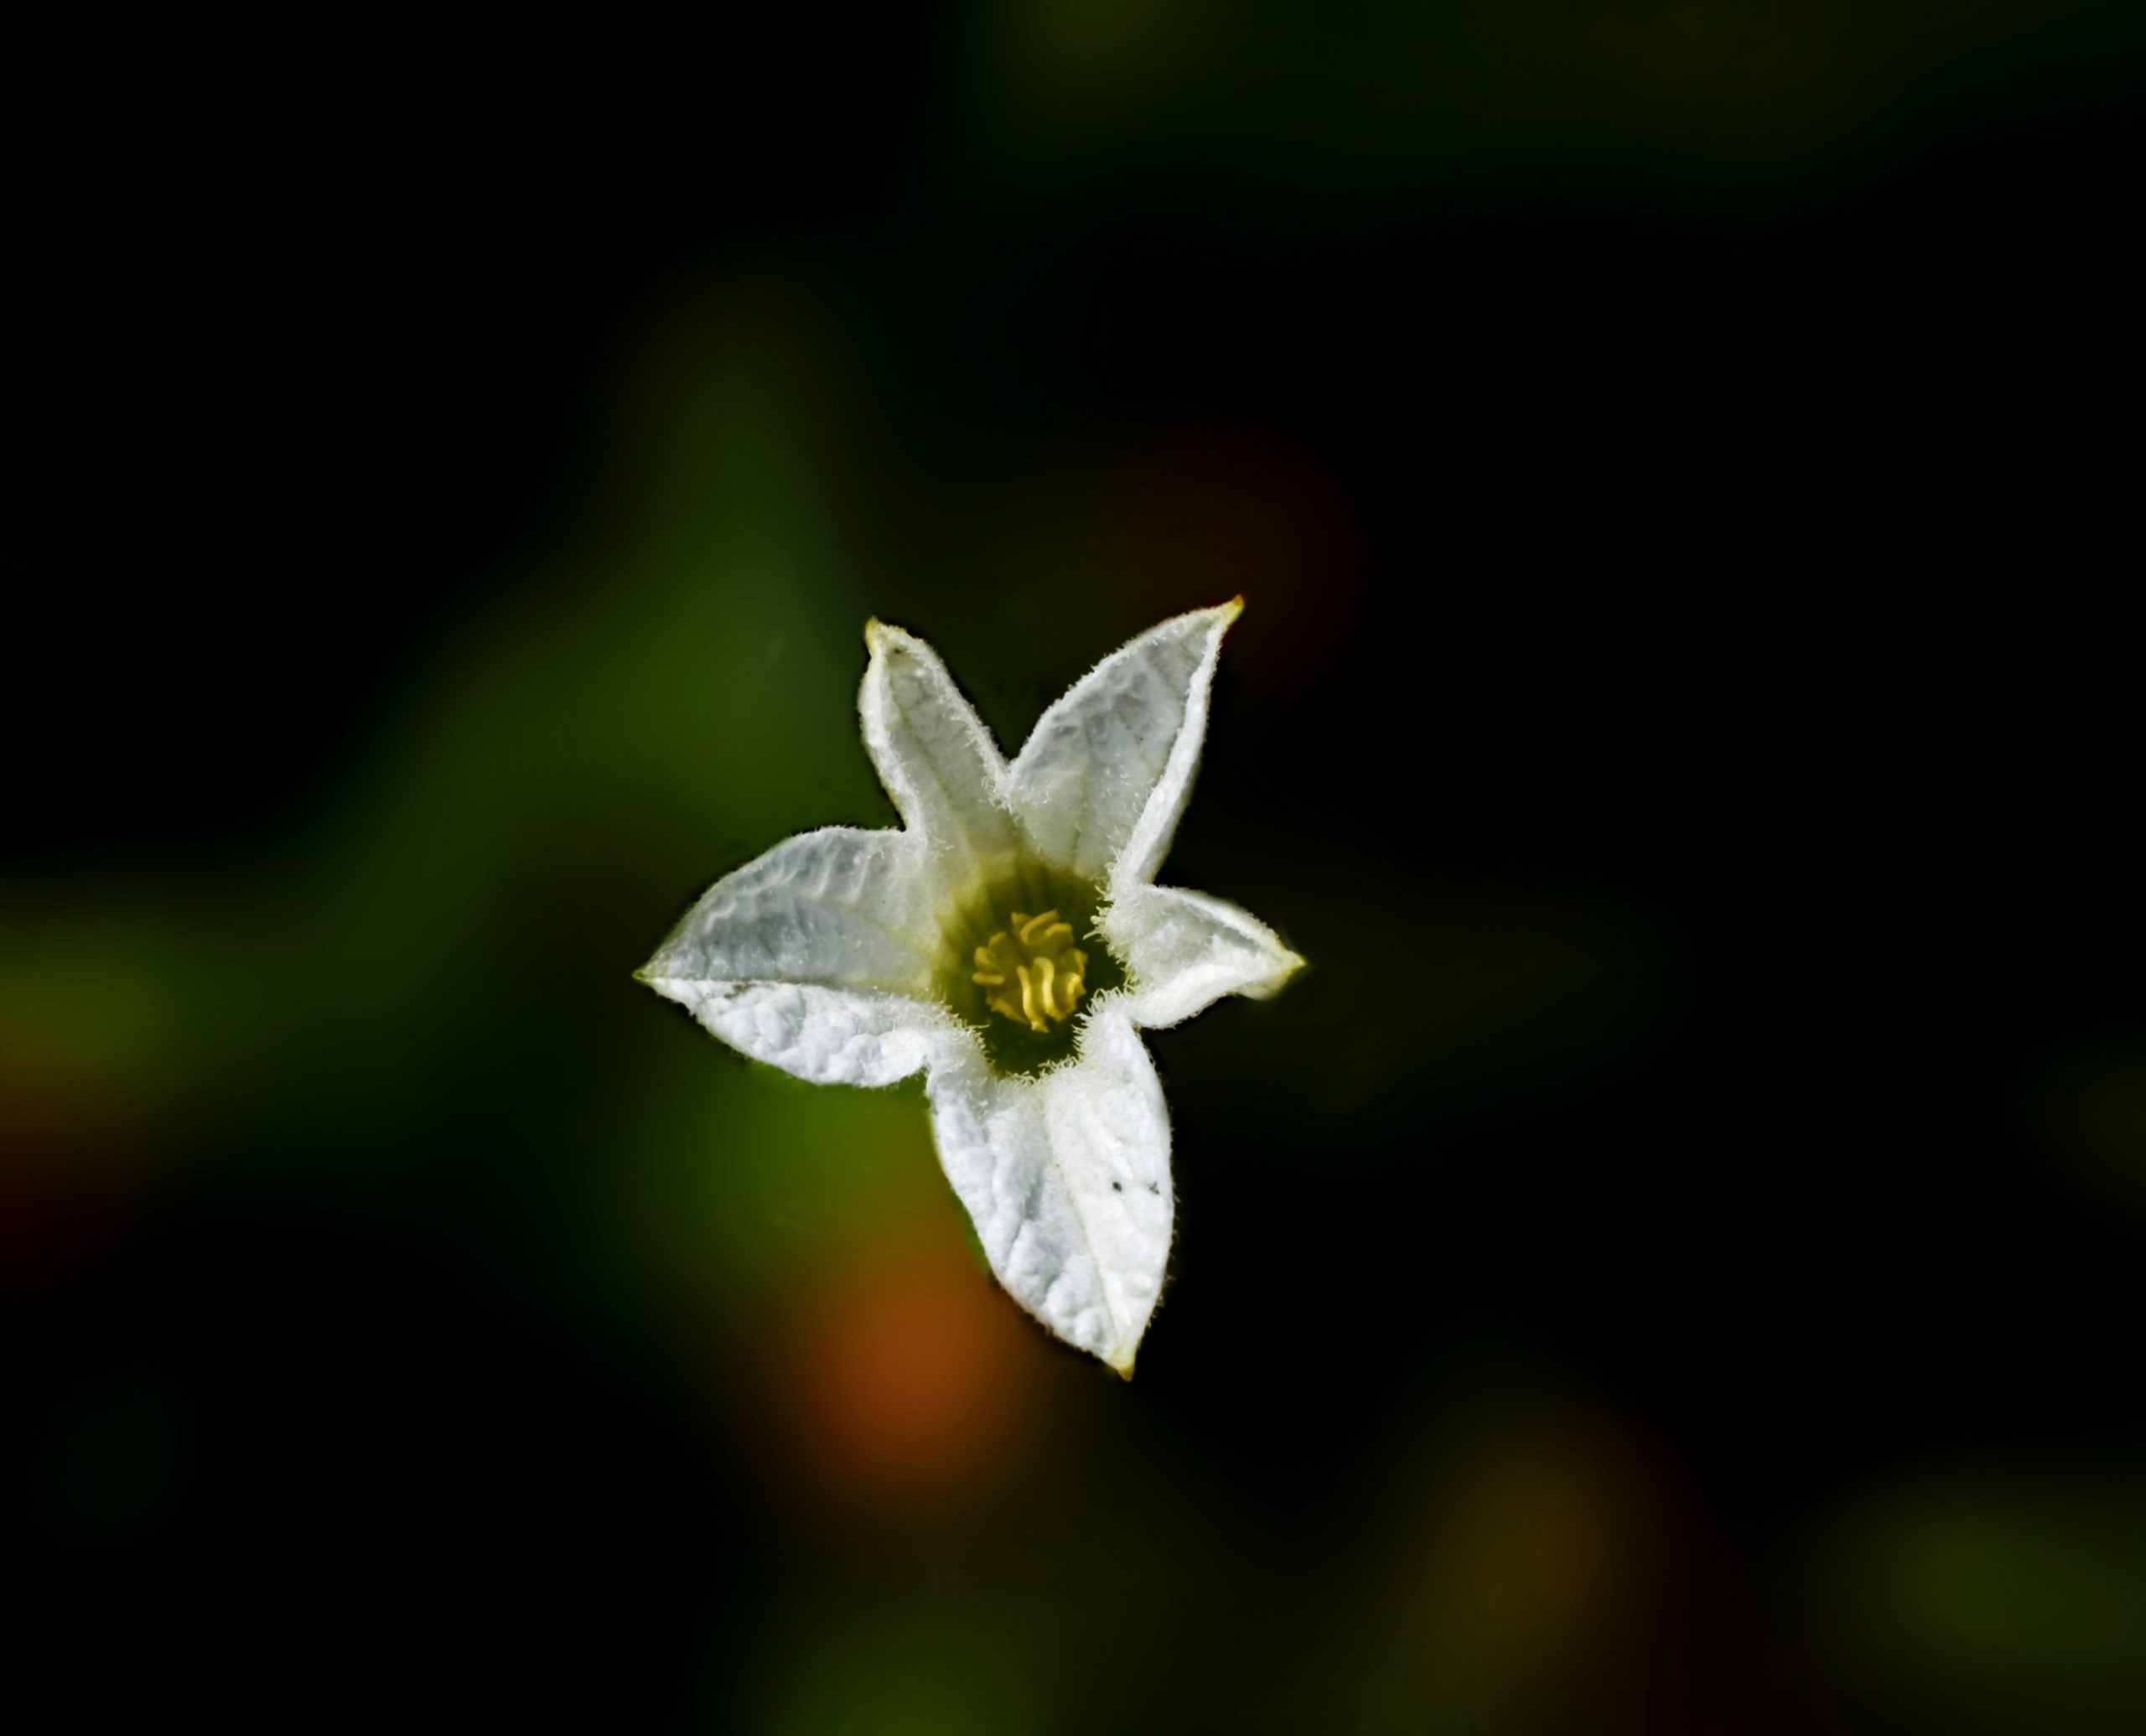 A white little flower